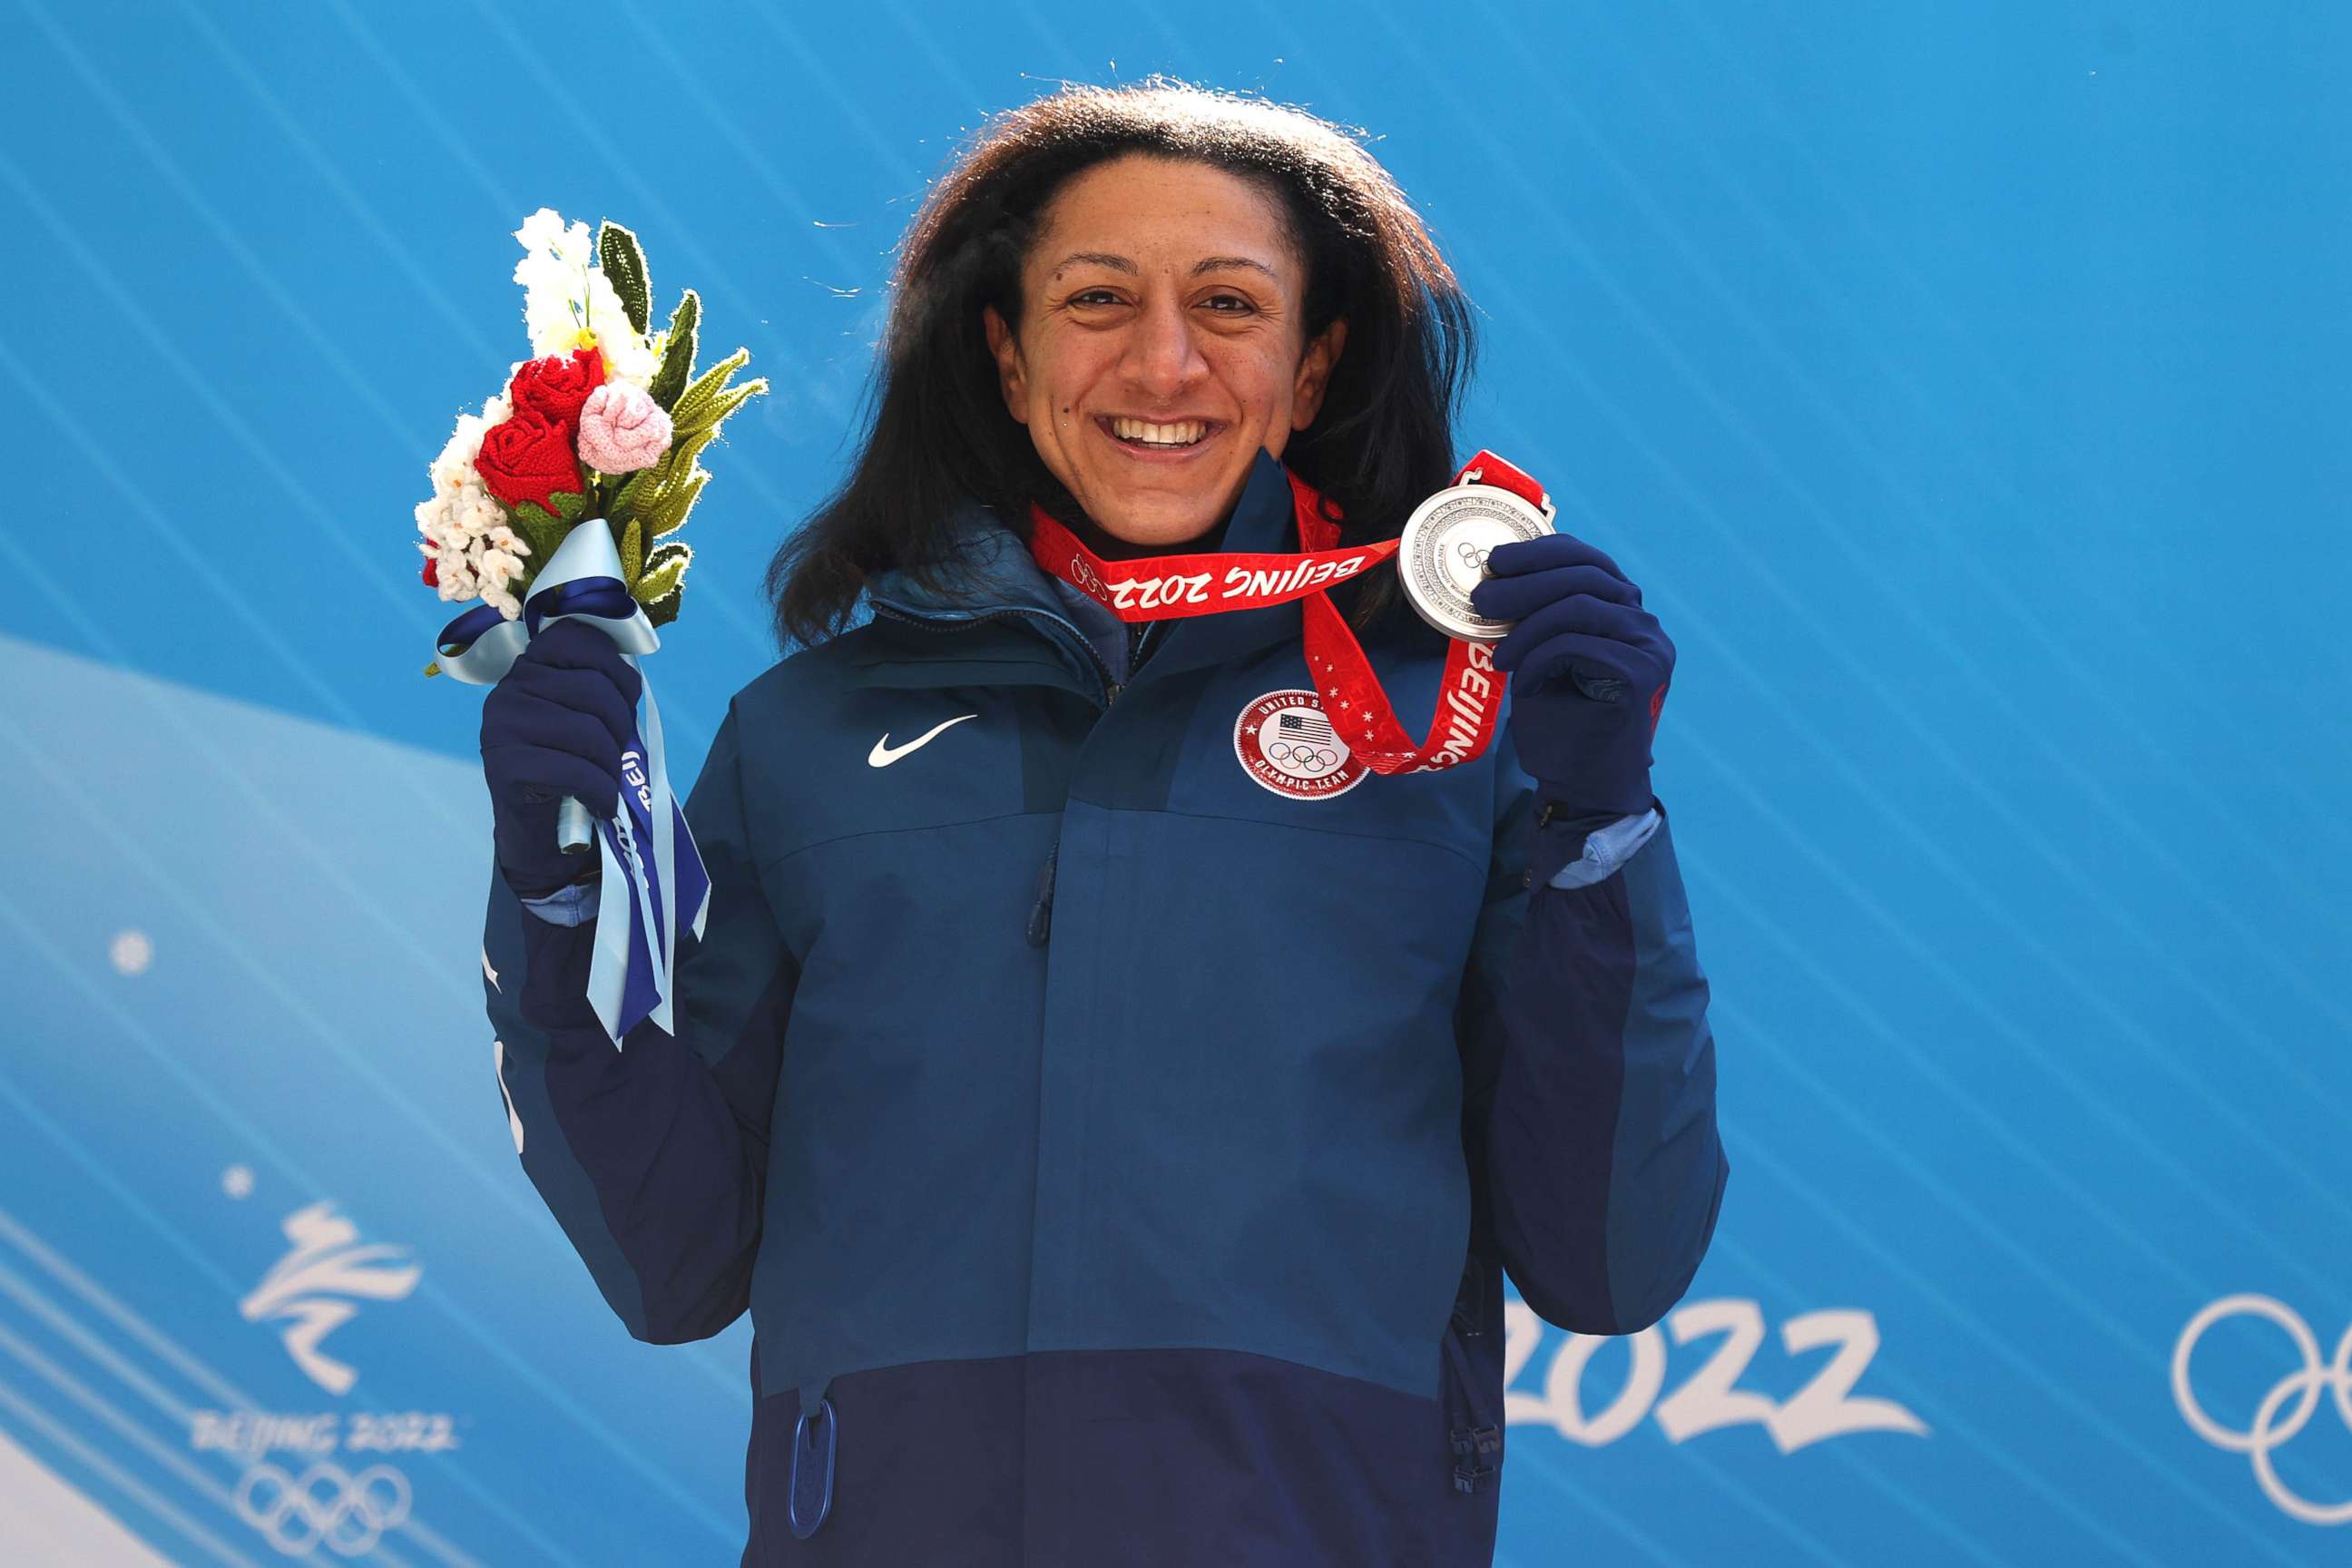 2022 olympic medal podium